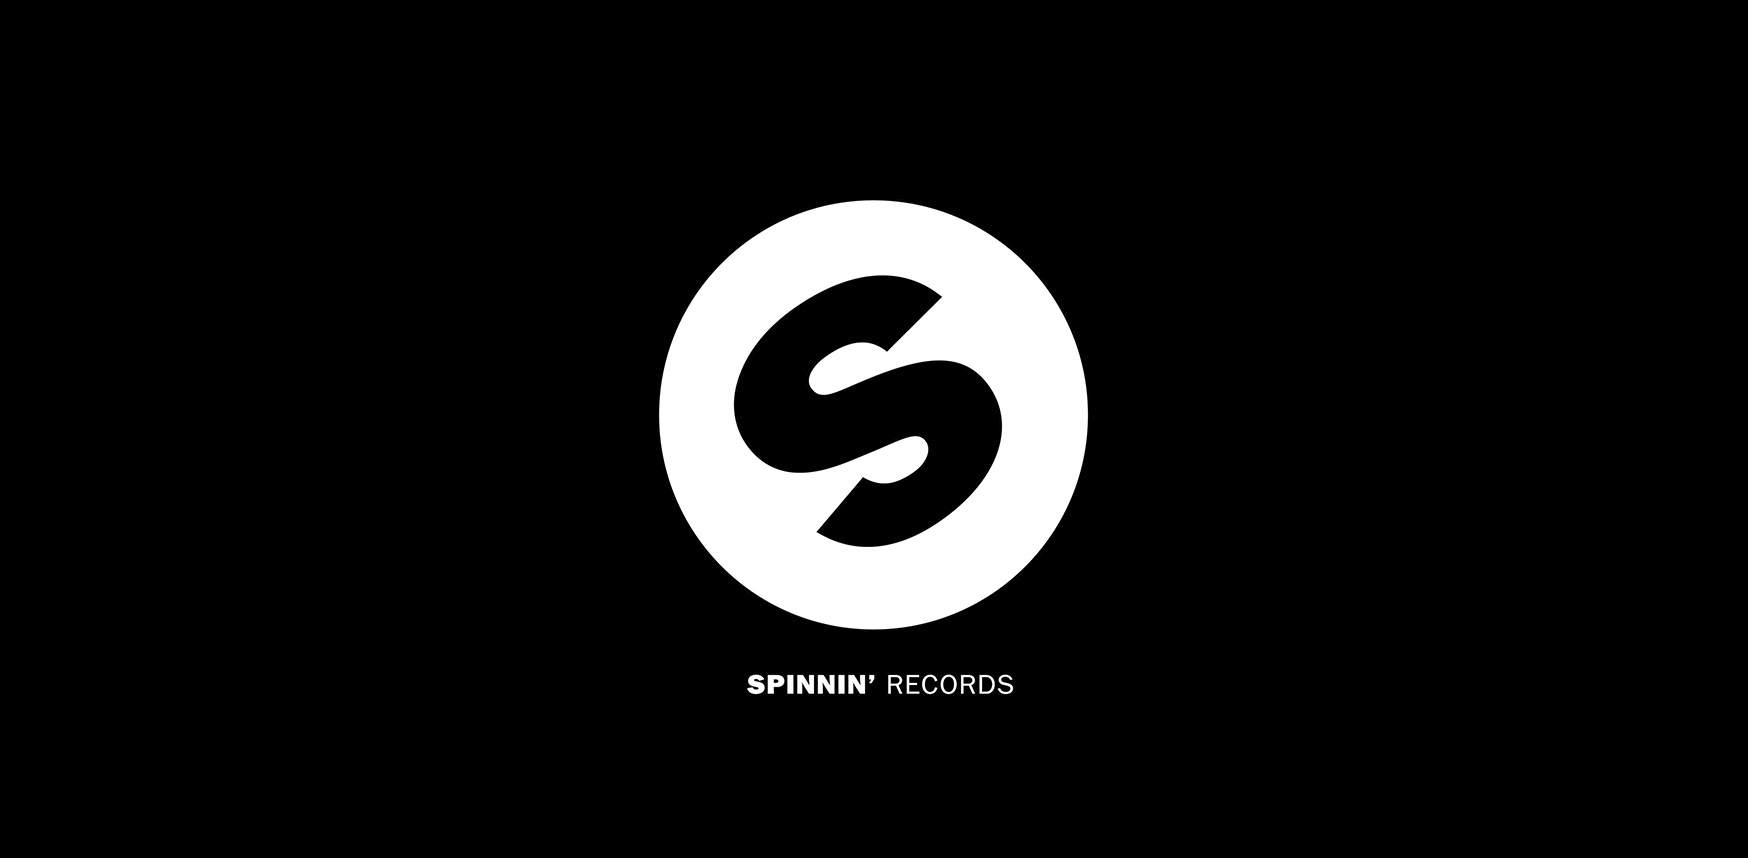 BREAKING: Warner Music Group bought Spinnin' Records 100 million